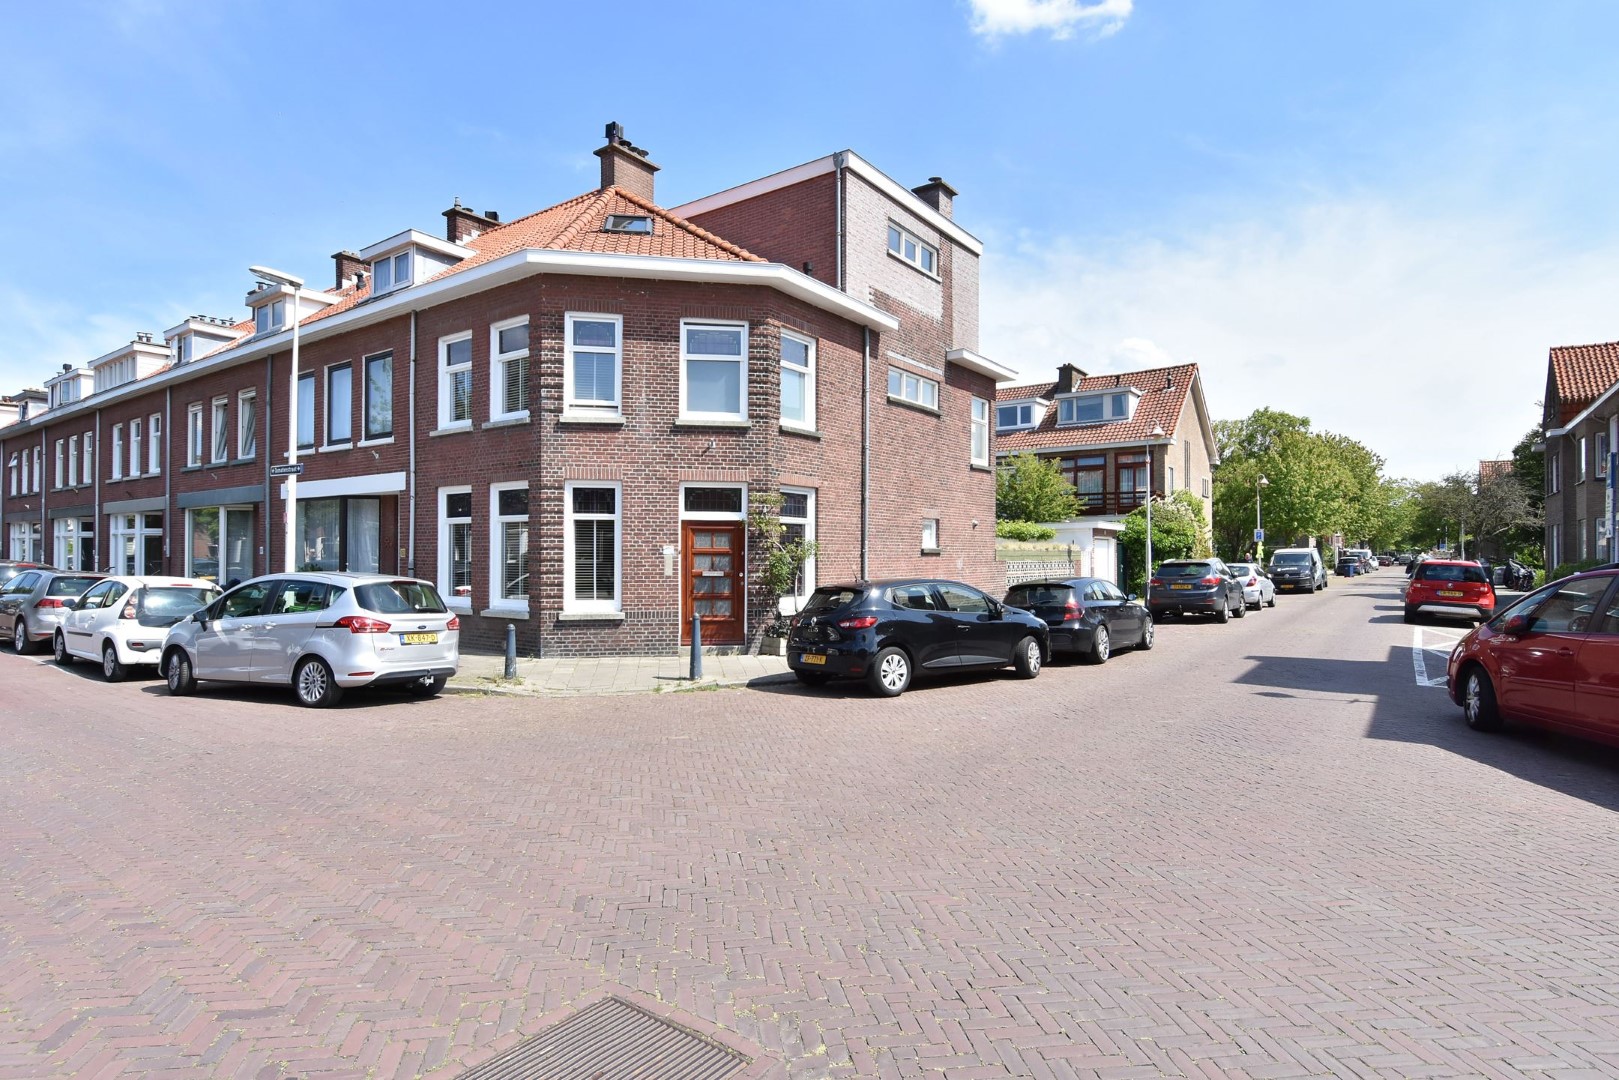 5 kamer hoek woning in de vruchtenbuurt in Den Haag